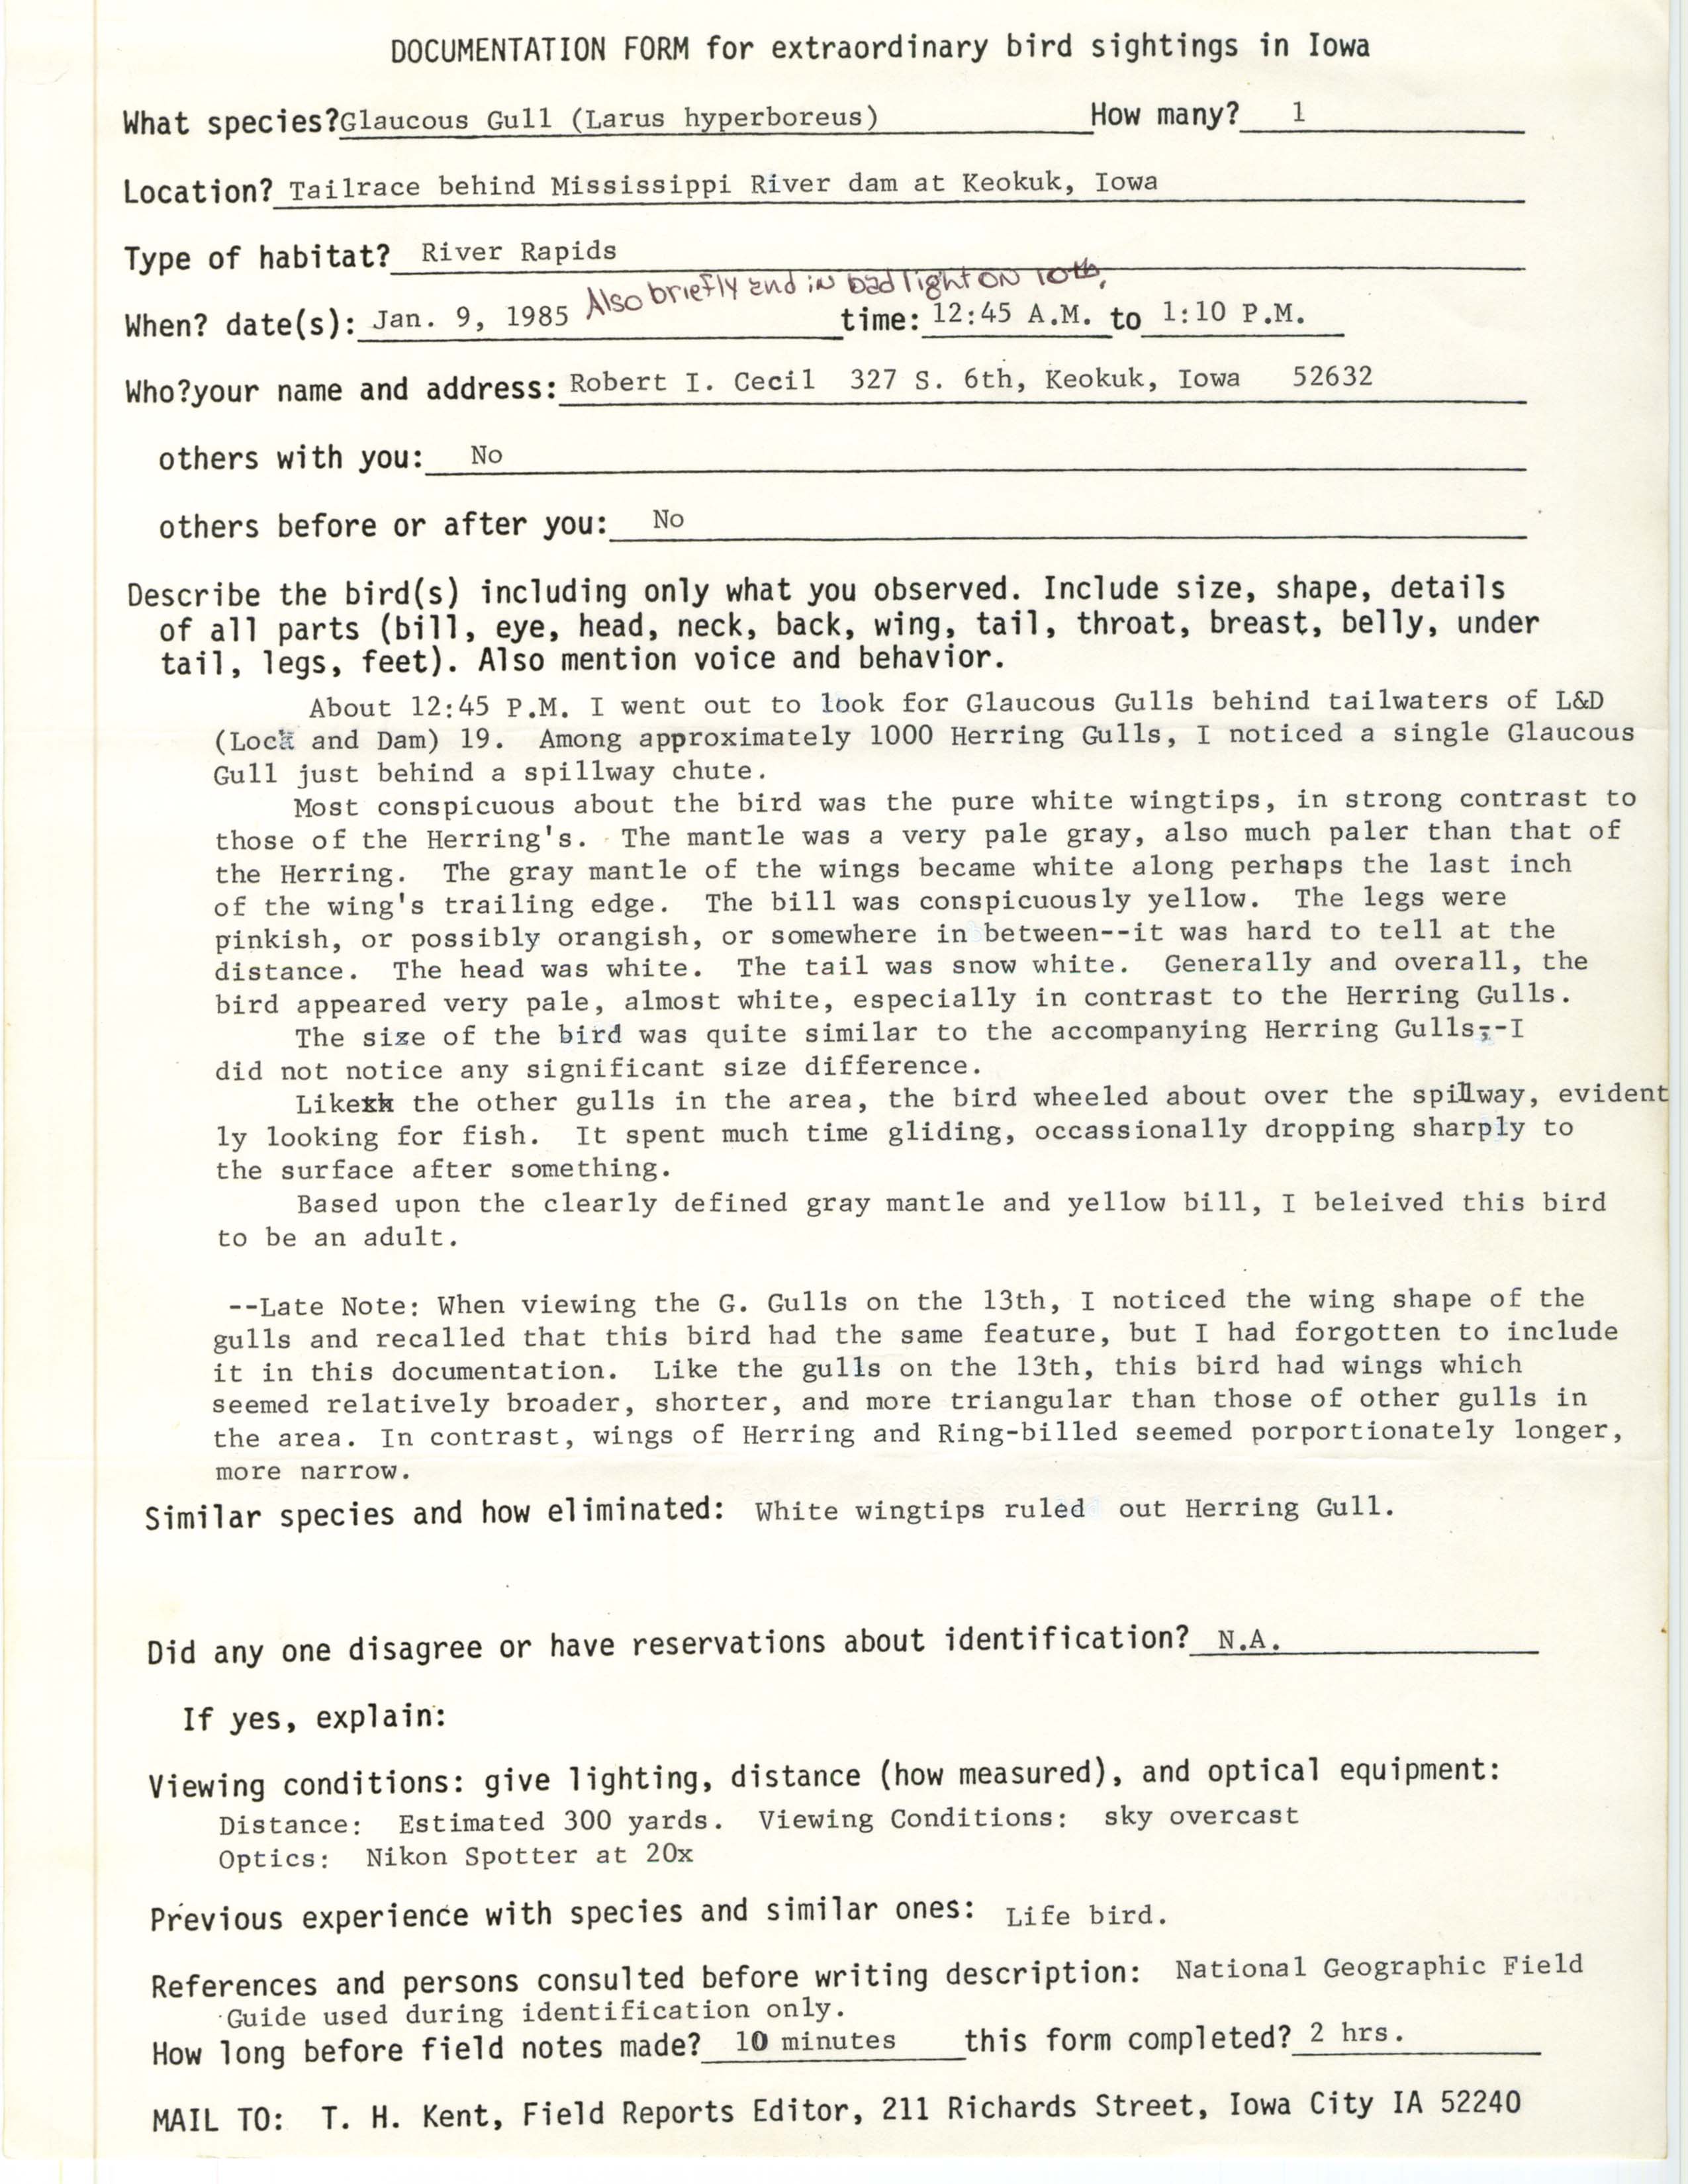 Rare bird documentation form for Glaucous Gull at Lock and Dam 19 at Keokuk, 1985